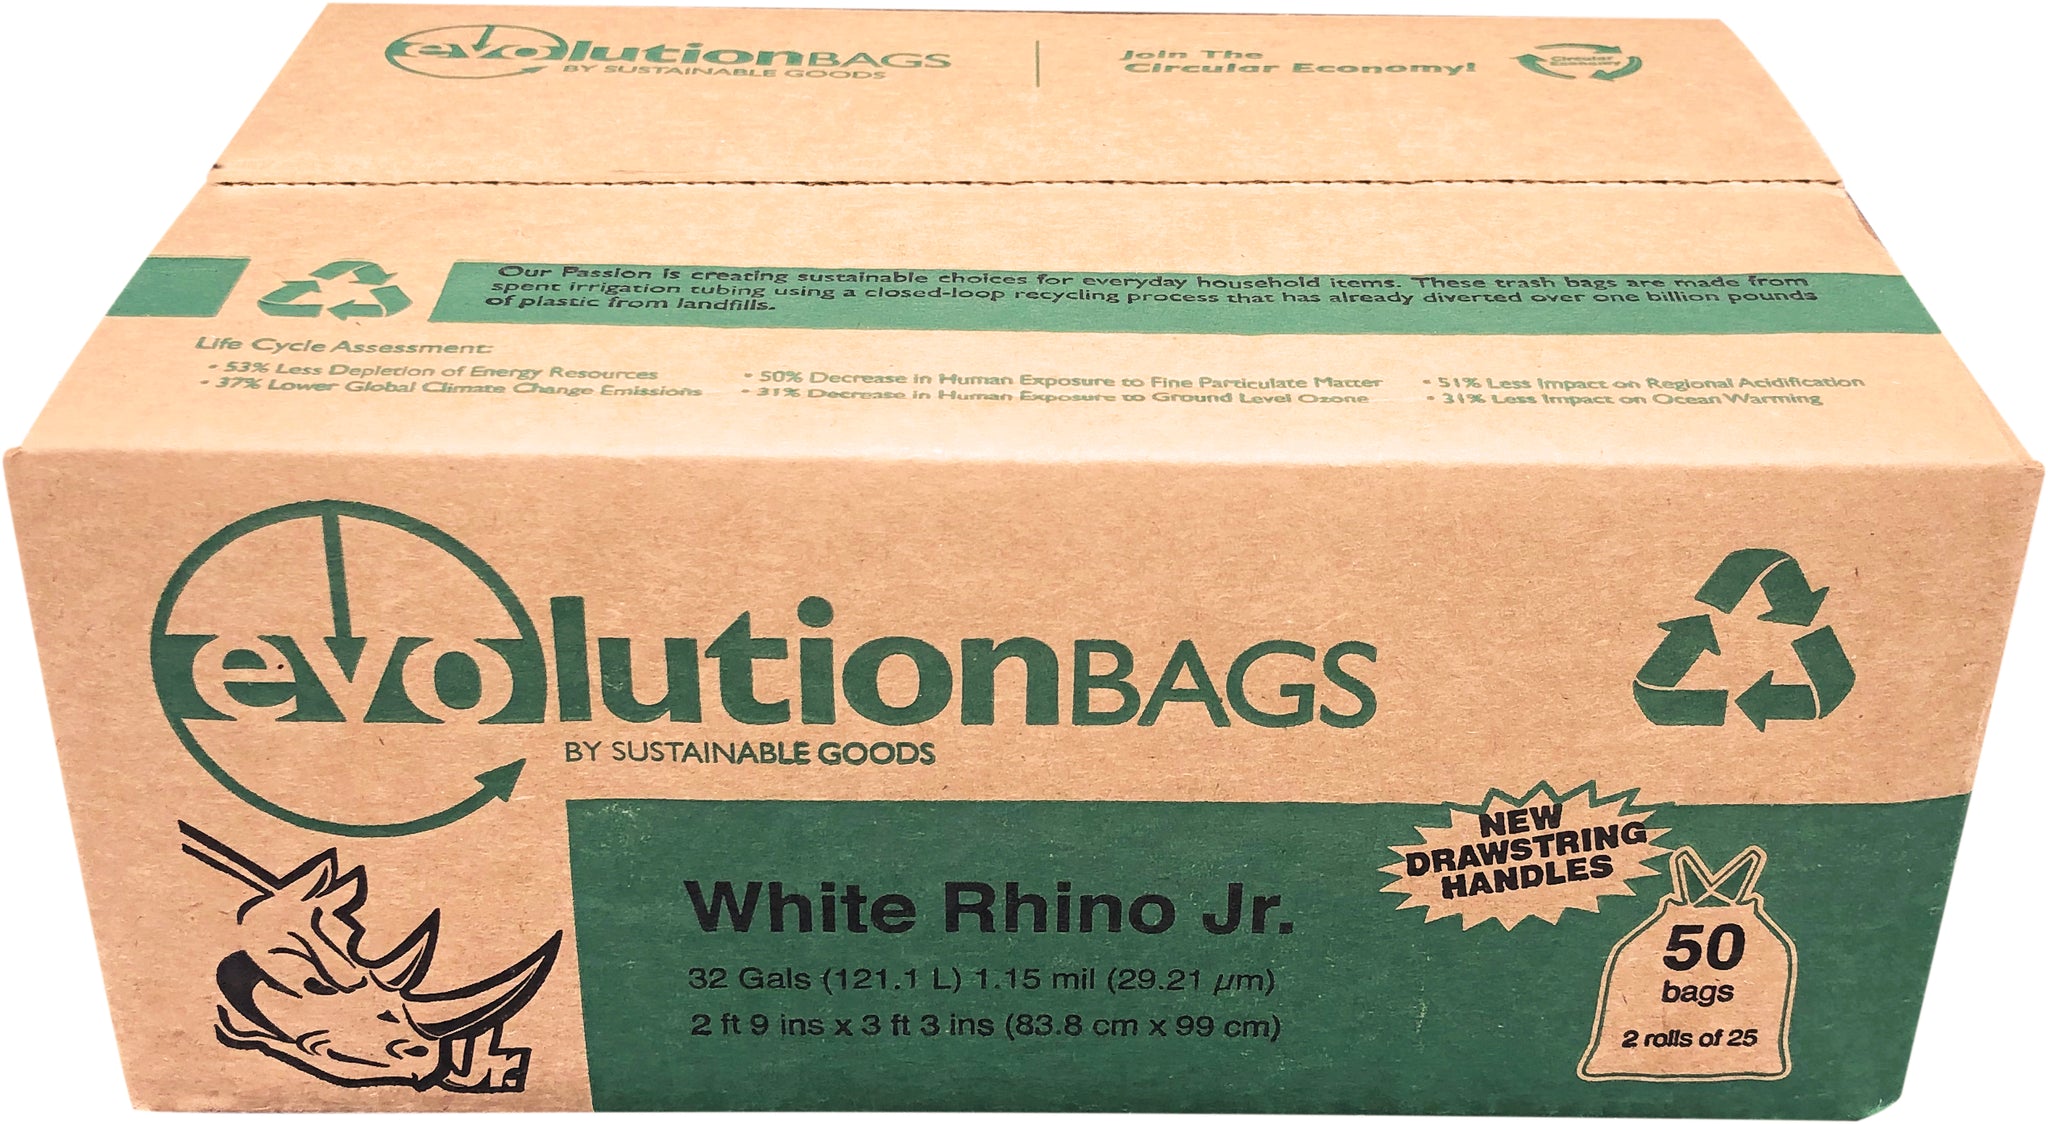 ROLL JUMBO RHINO GARBAGE BAGS 38 X 50- (10 BAGS)  Americas Marketing  Company Limited (AMCOL) Hardware